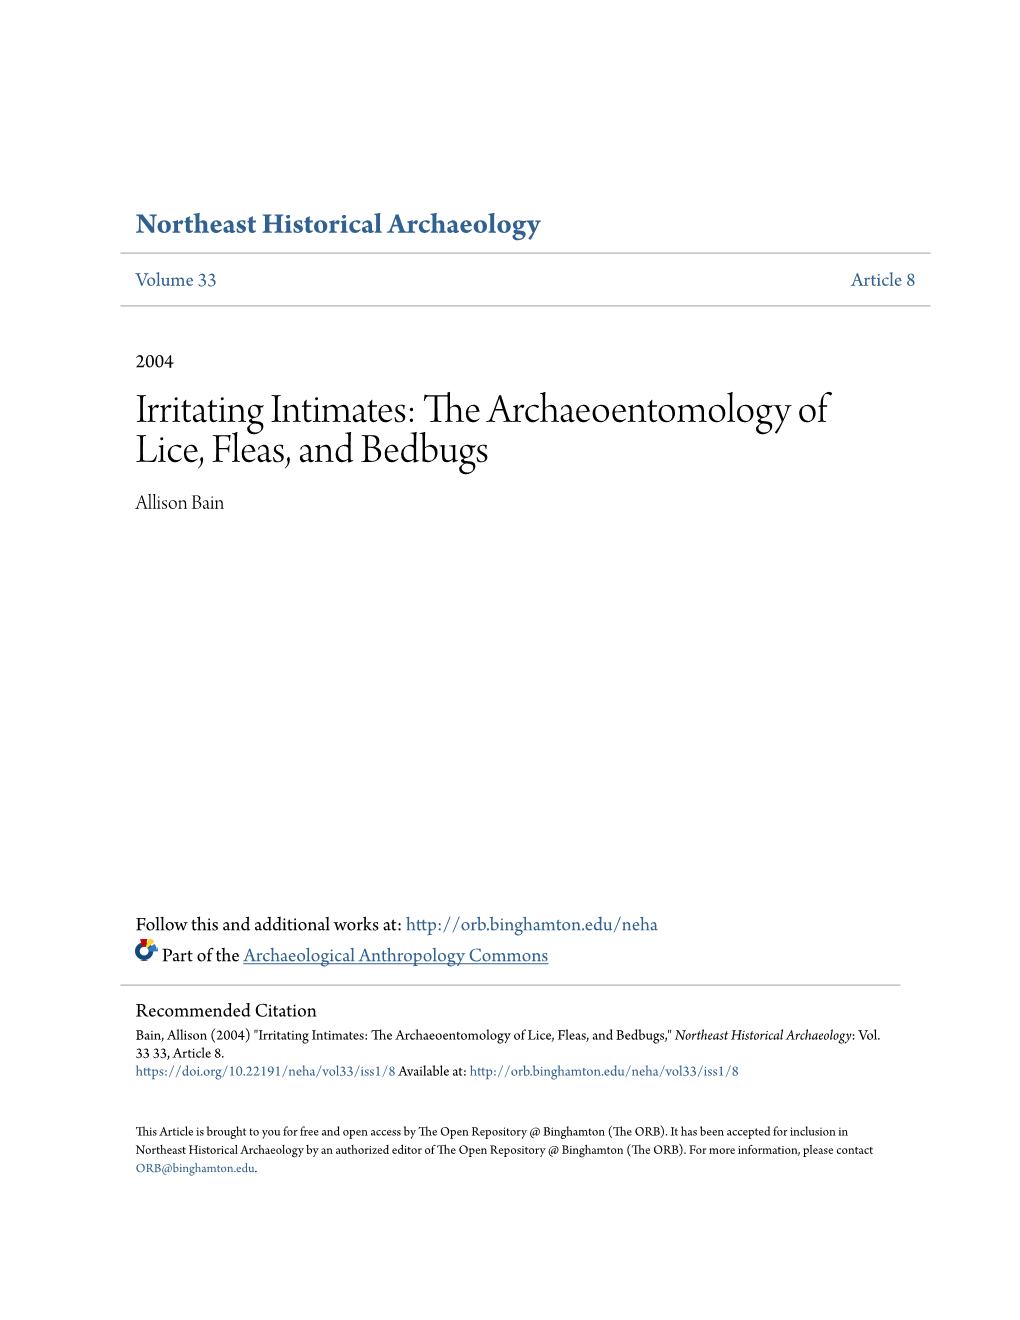 Irritating Intimates: the Archaeoentomology of Lice, Fleas, and Bedbugs Allison Bain